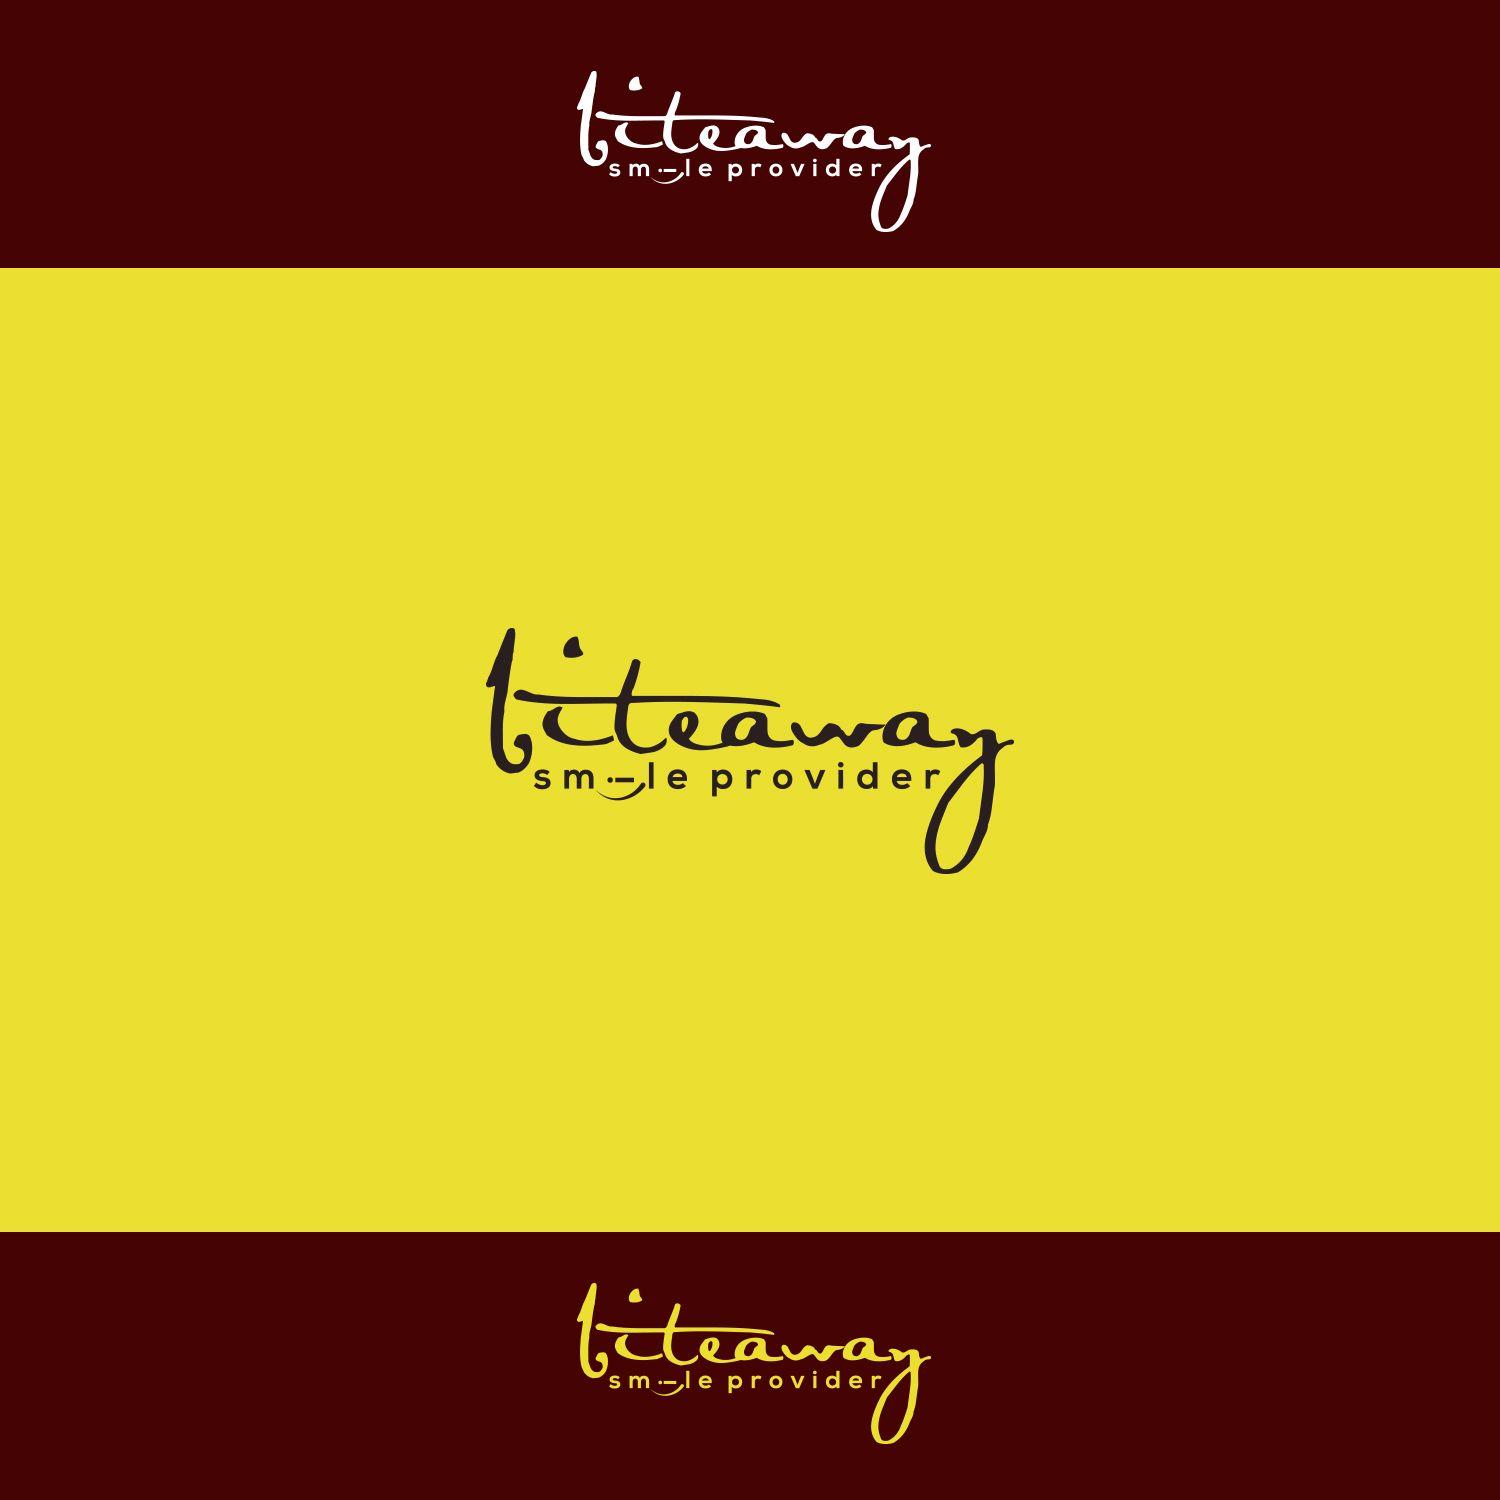 Laway Logo - Logo Design for biteaway smile provider by Kiran | Design #15656078